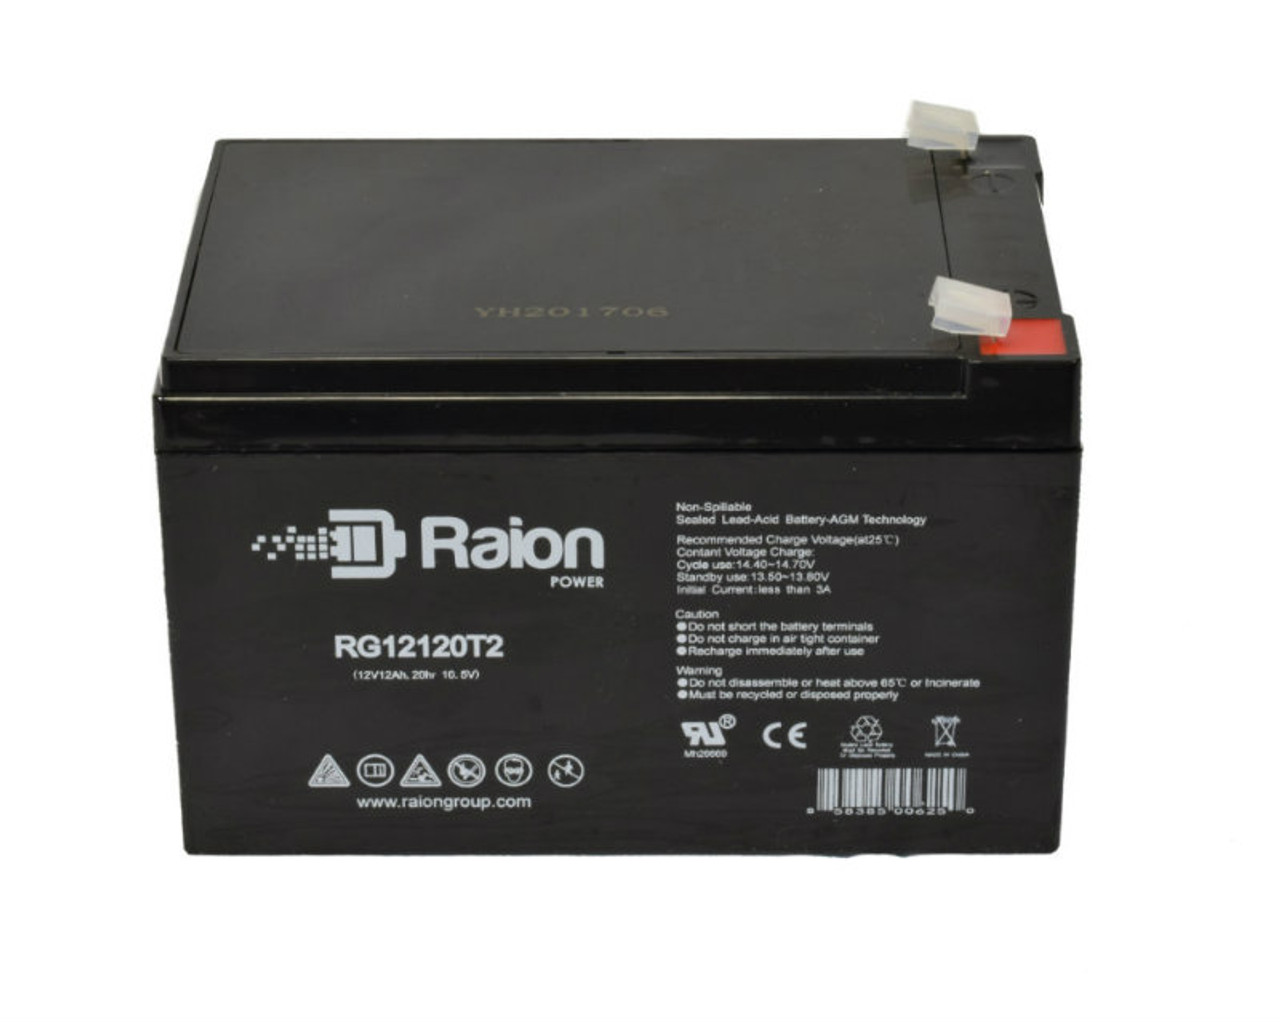 Raion Power RG12120T2 SLA Battery for Sonnenschein A212/10.0S